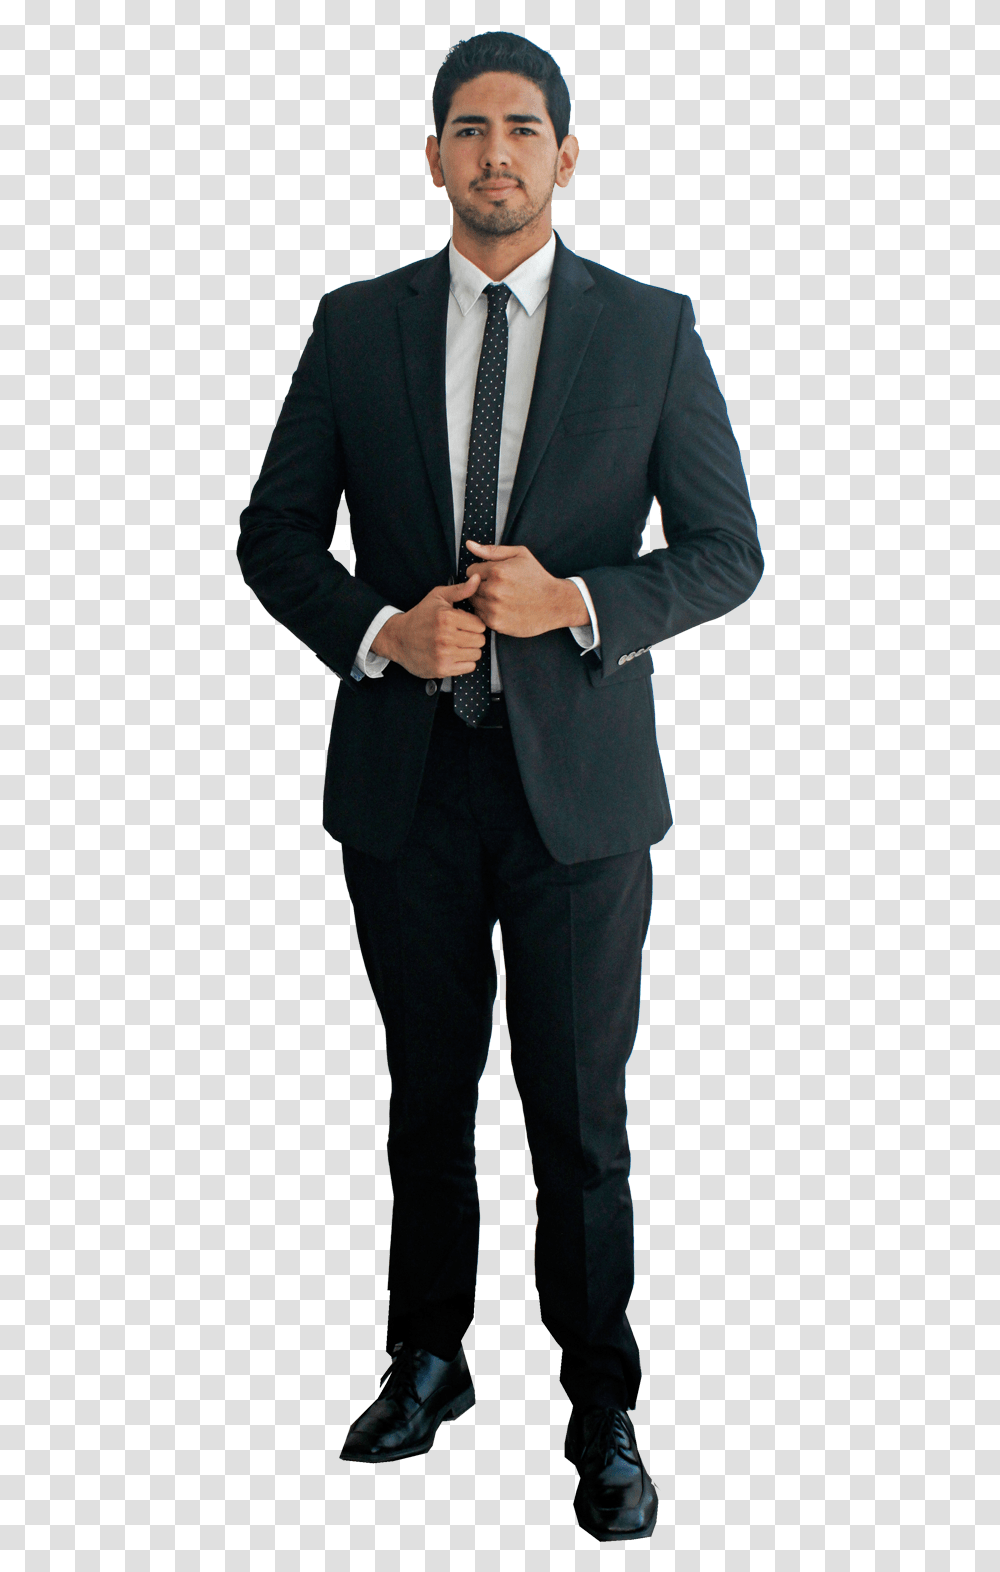 Kurt Angle 2017 Kurt Angle General Manager, Suit, Overcoat, Tie Transparent Png